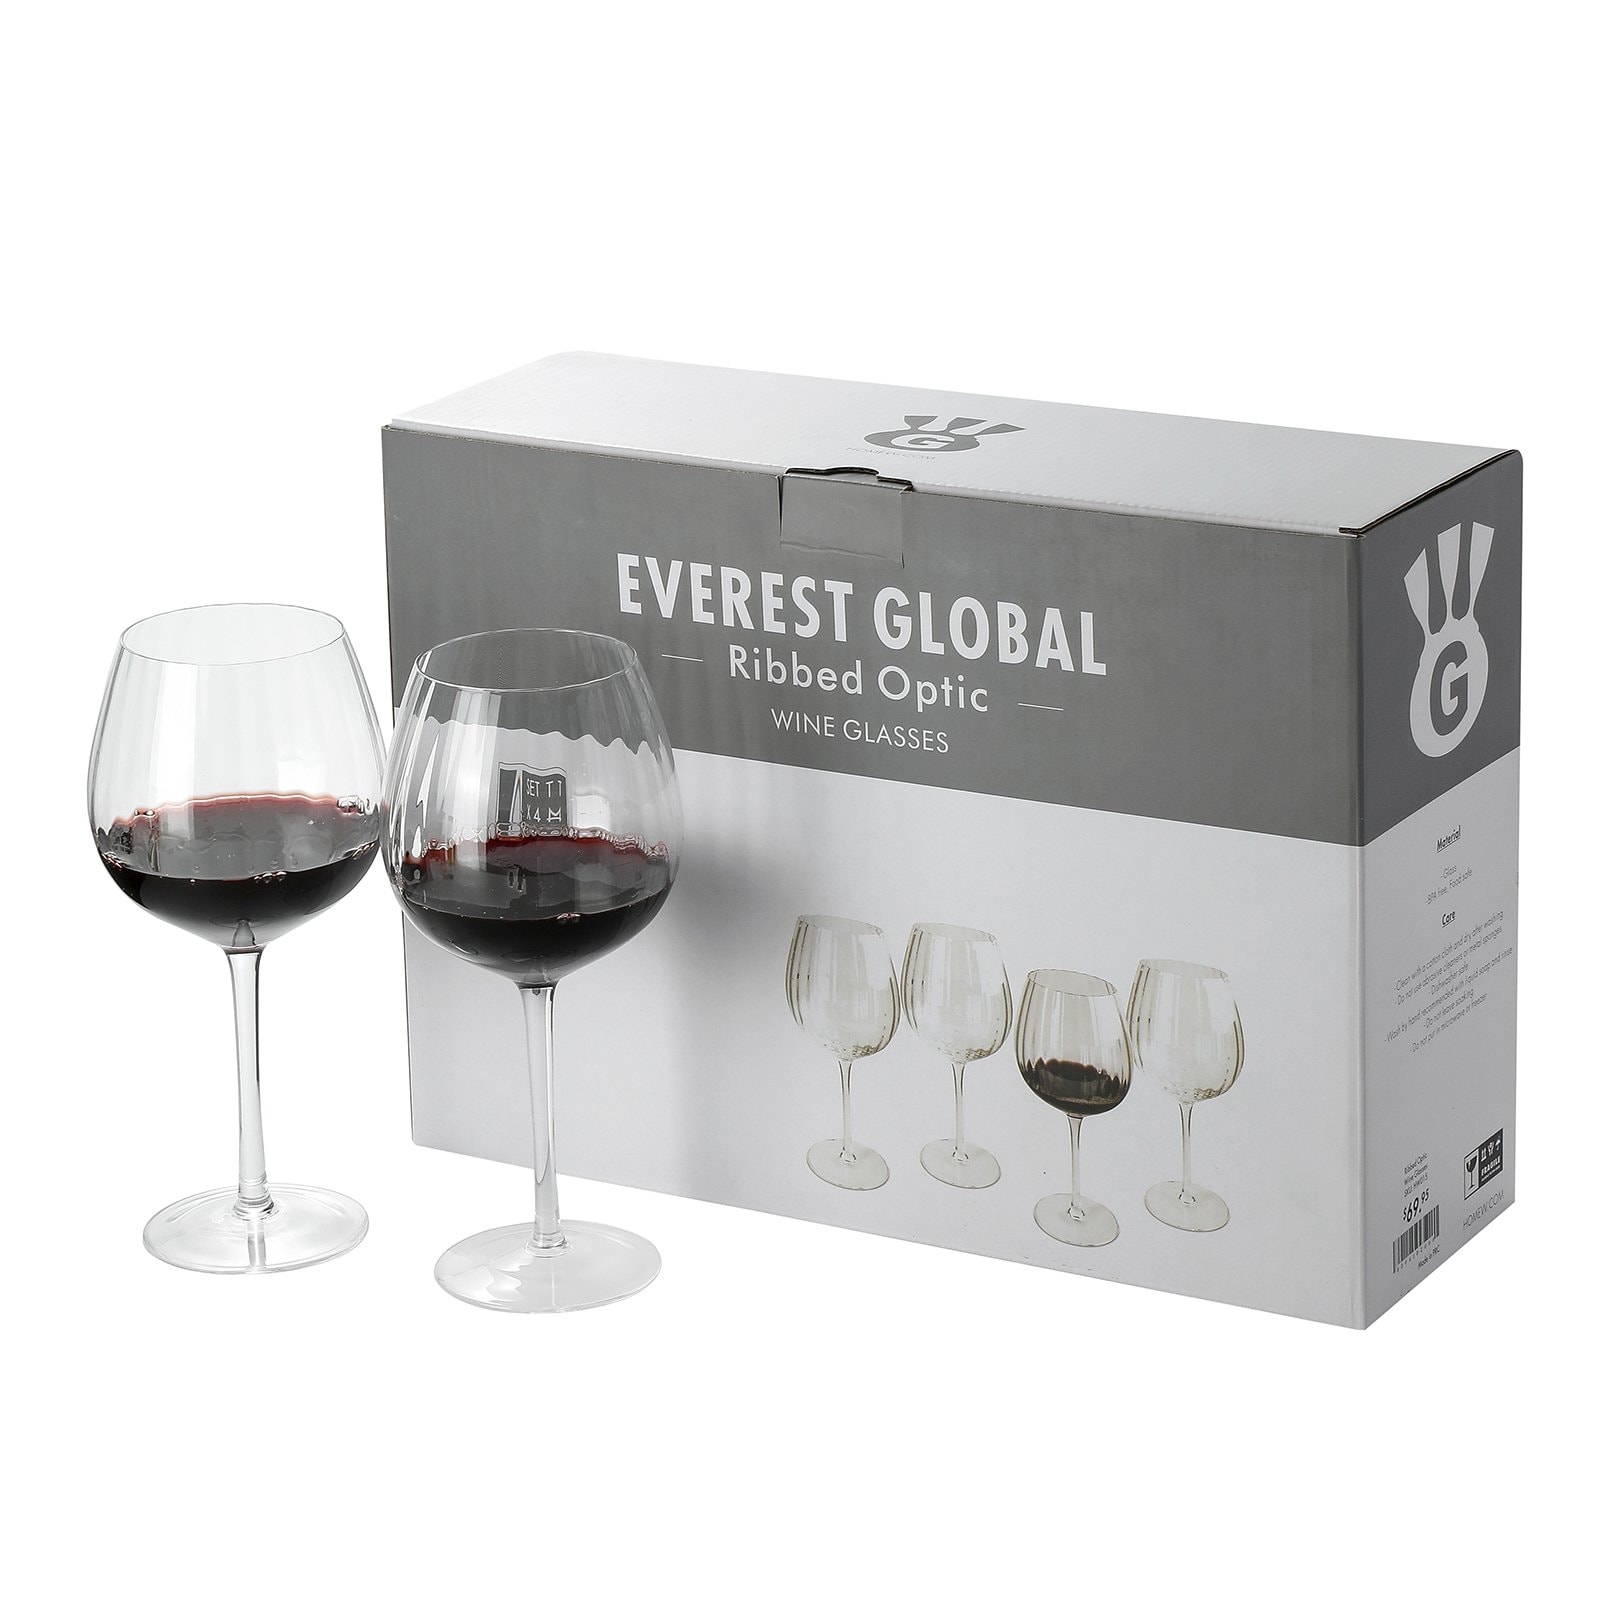 EVEREST GLOBAL Ribbed Optic Margarita Glasses 11 oz. set of 4